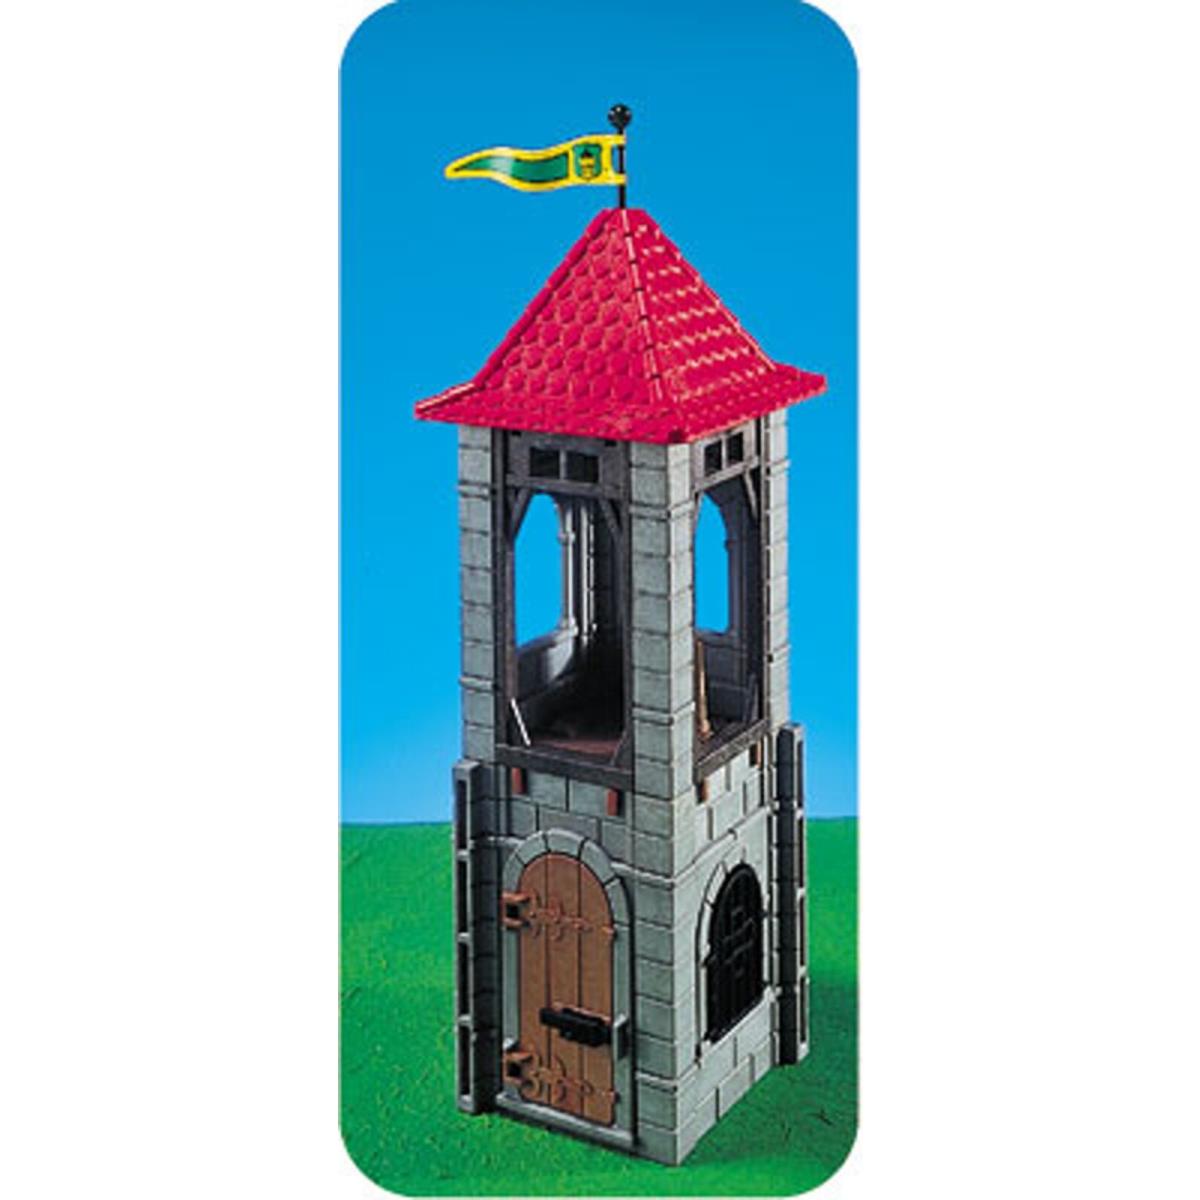 Playmobil 7144 Vintage Guard Tower - Mint in Bag Steck Syatem